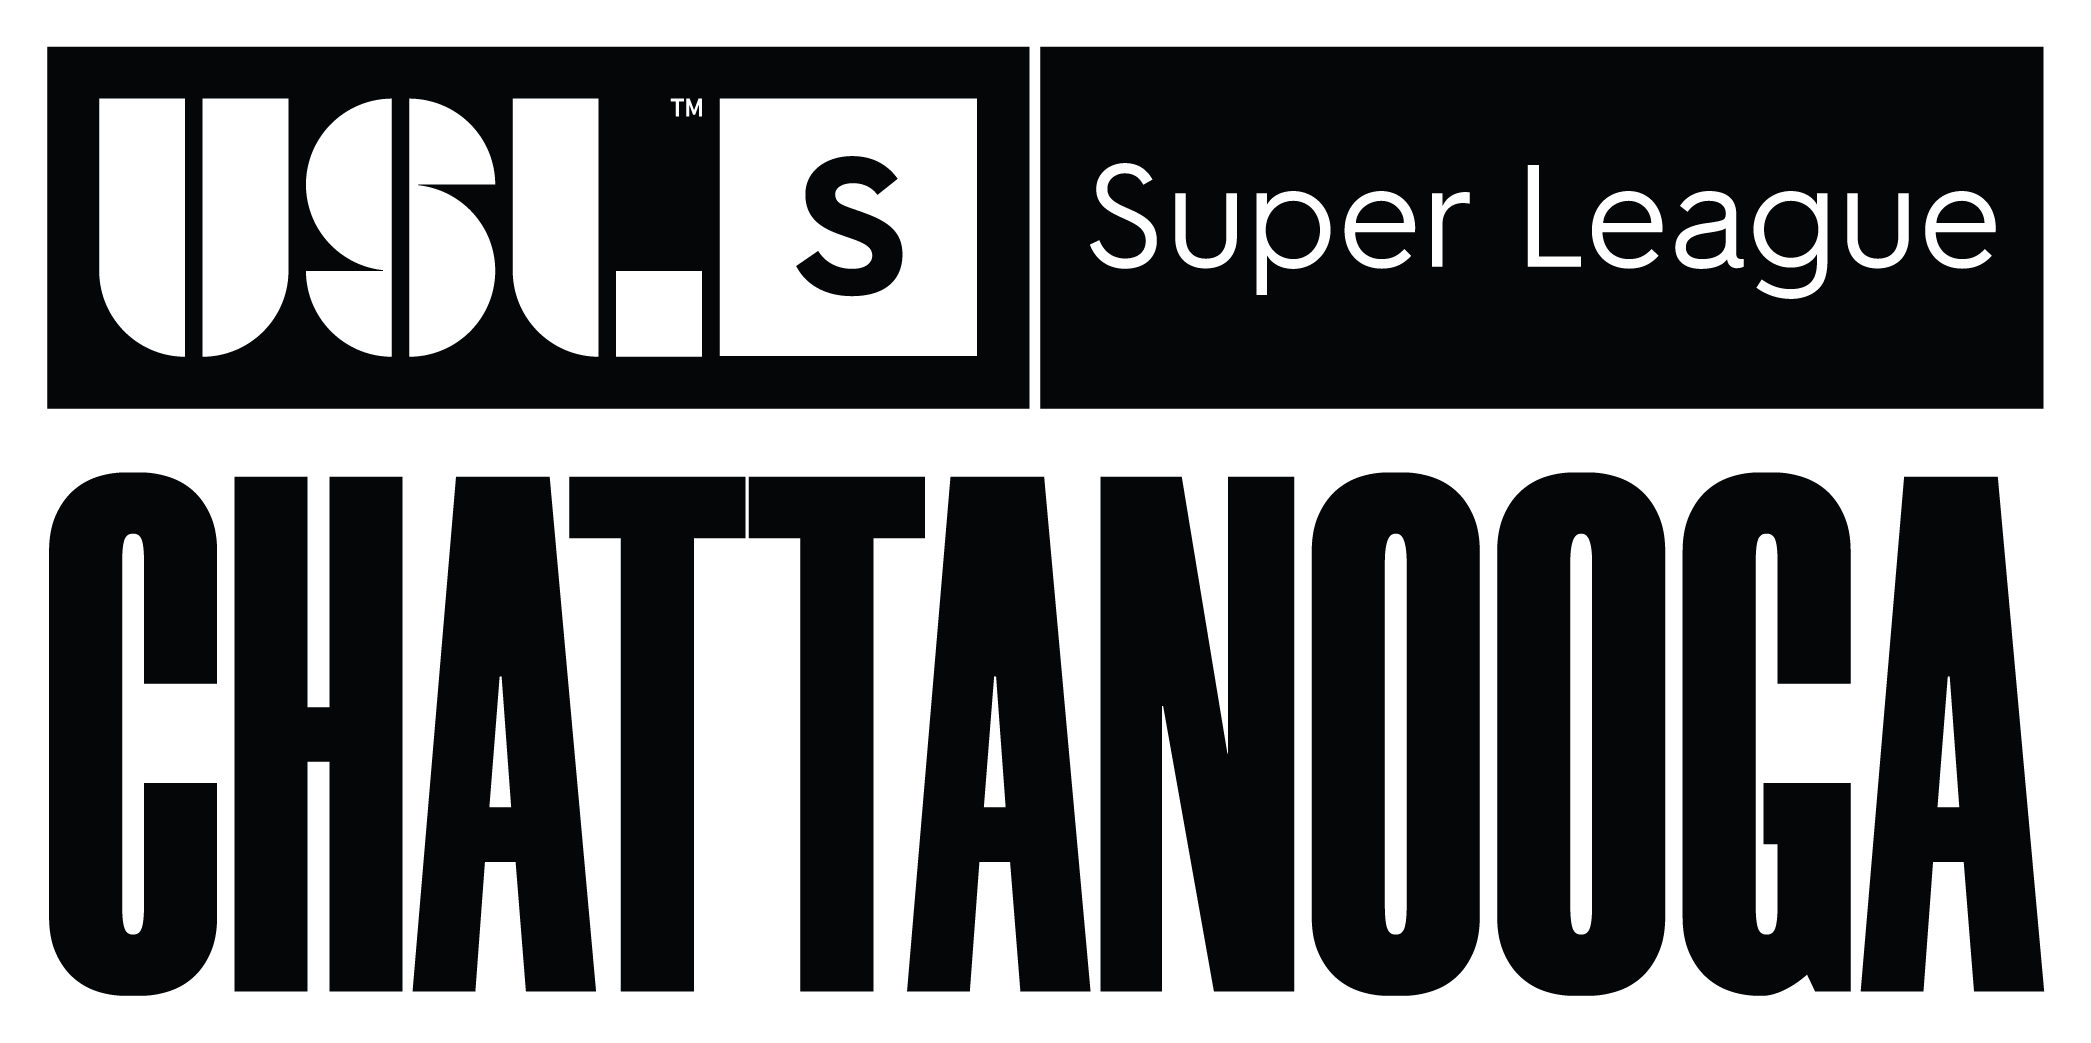 Super League Chattanooga wordmark black